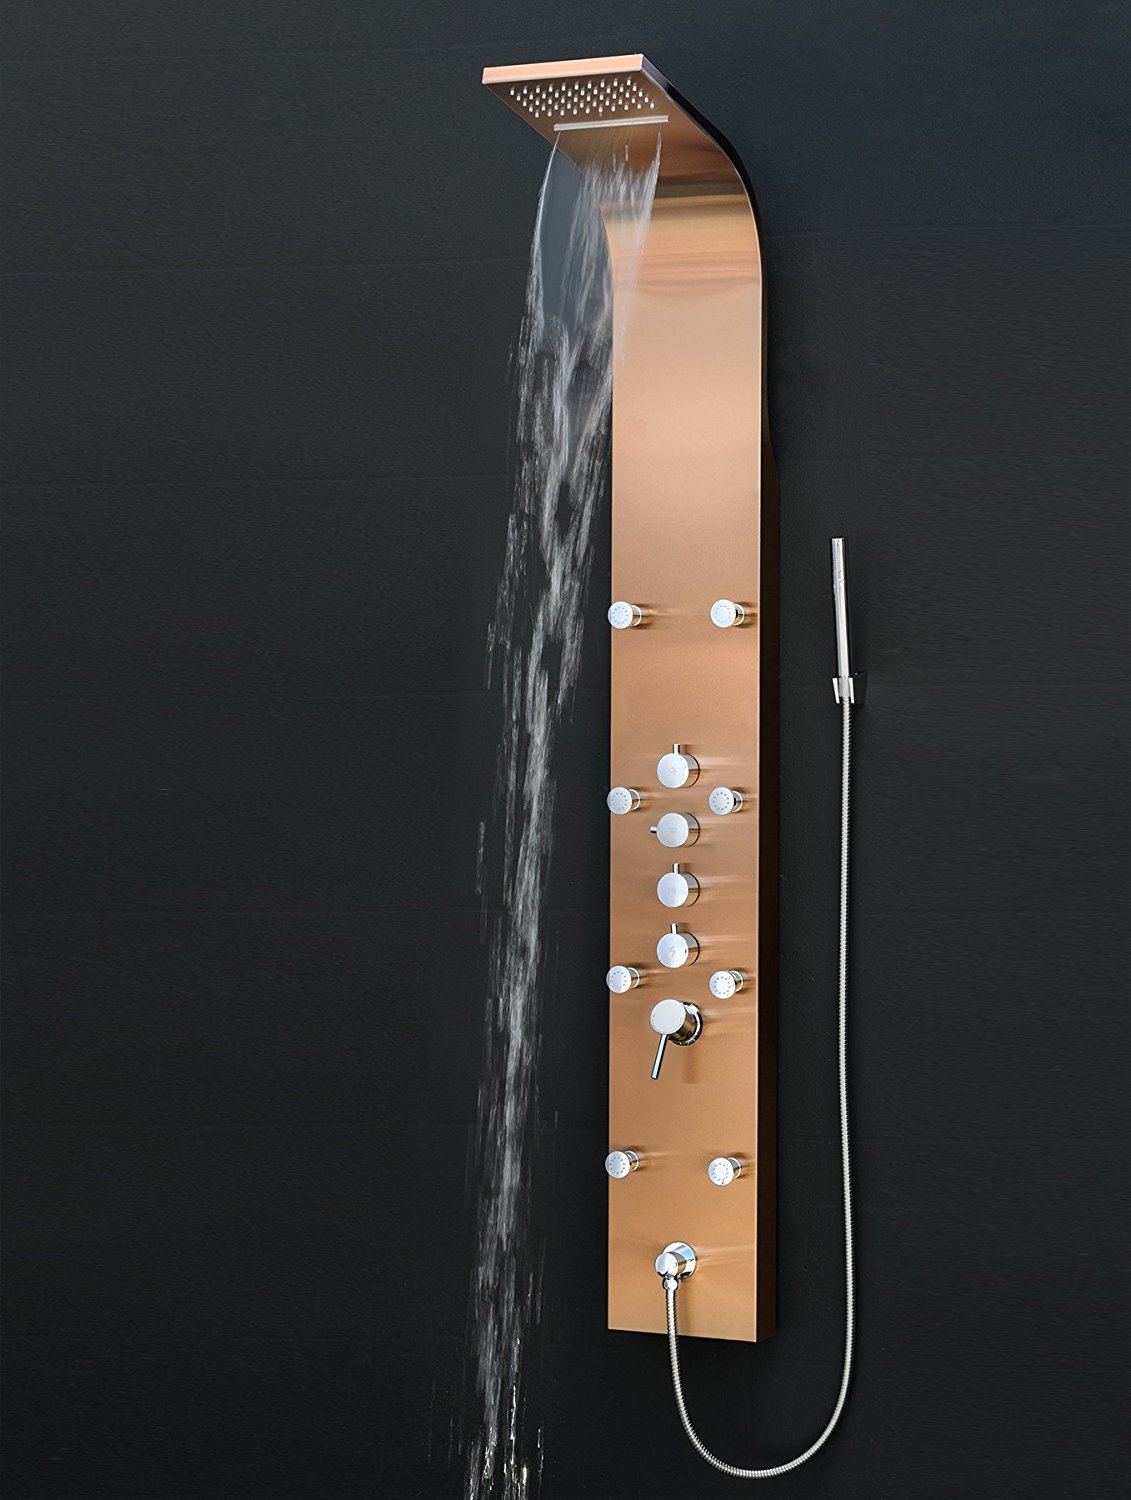 Bathselect 65″ Light Oil Rubbed Bronze Multi-Functional Shower Panel